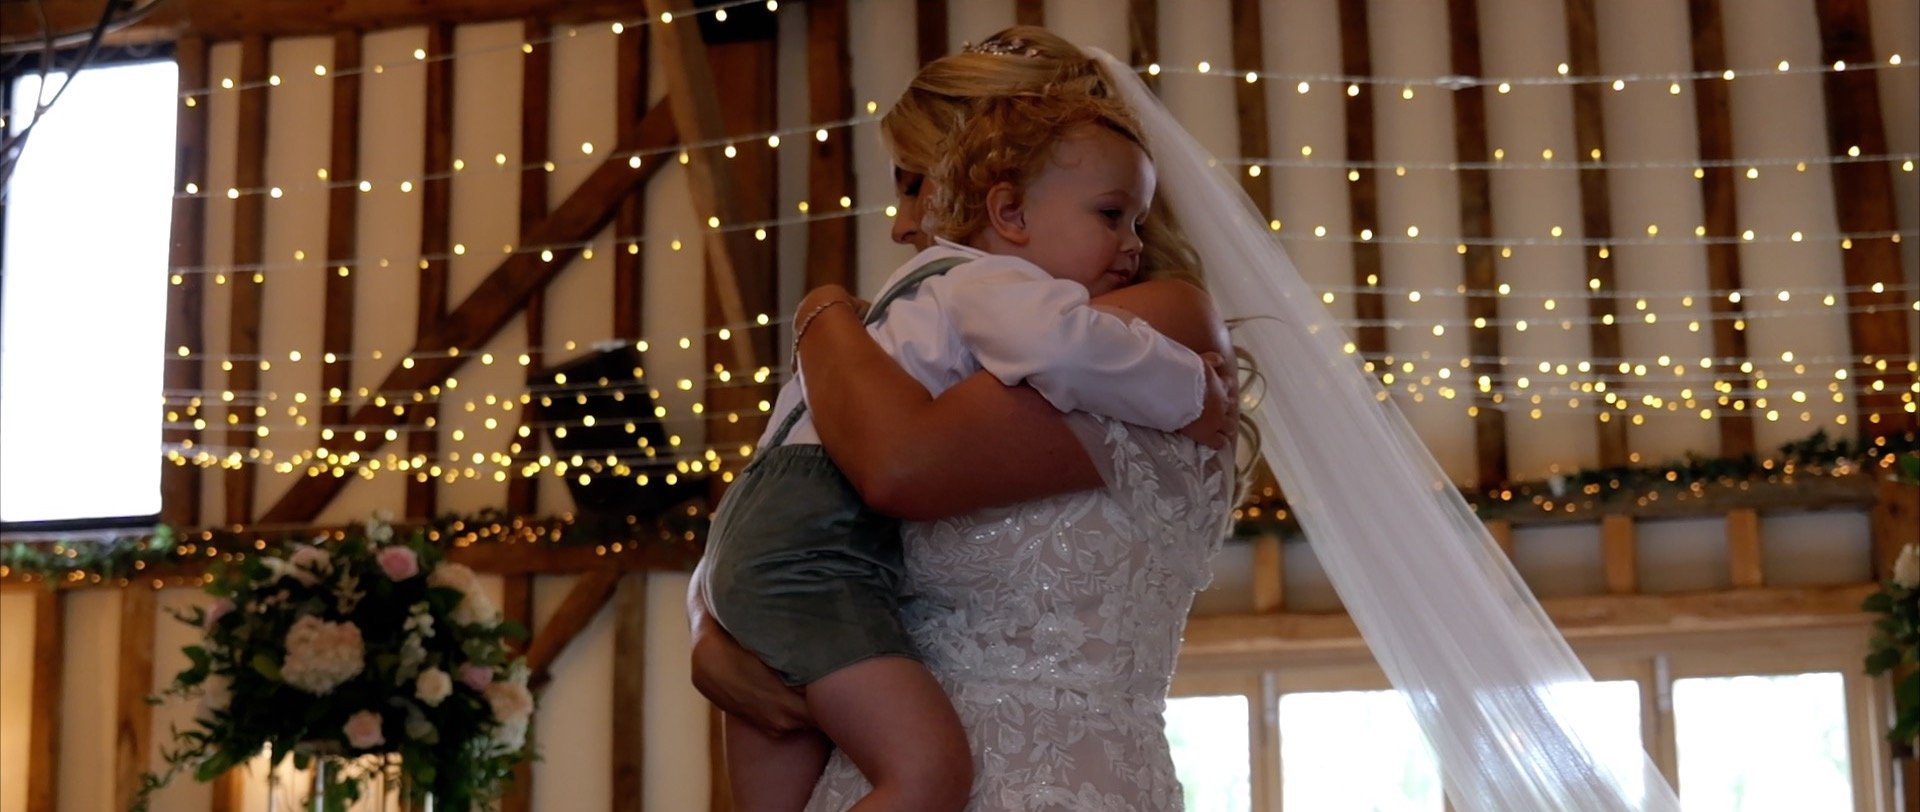 Crondon Park Wedding Videography - 3 Cheers Media - Mum and Son.jpg